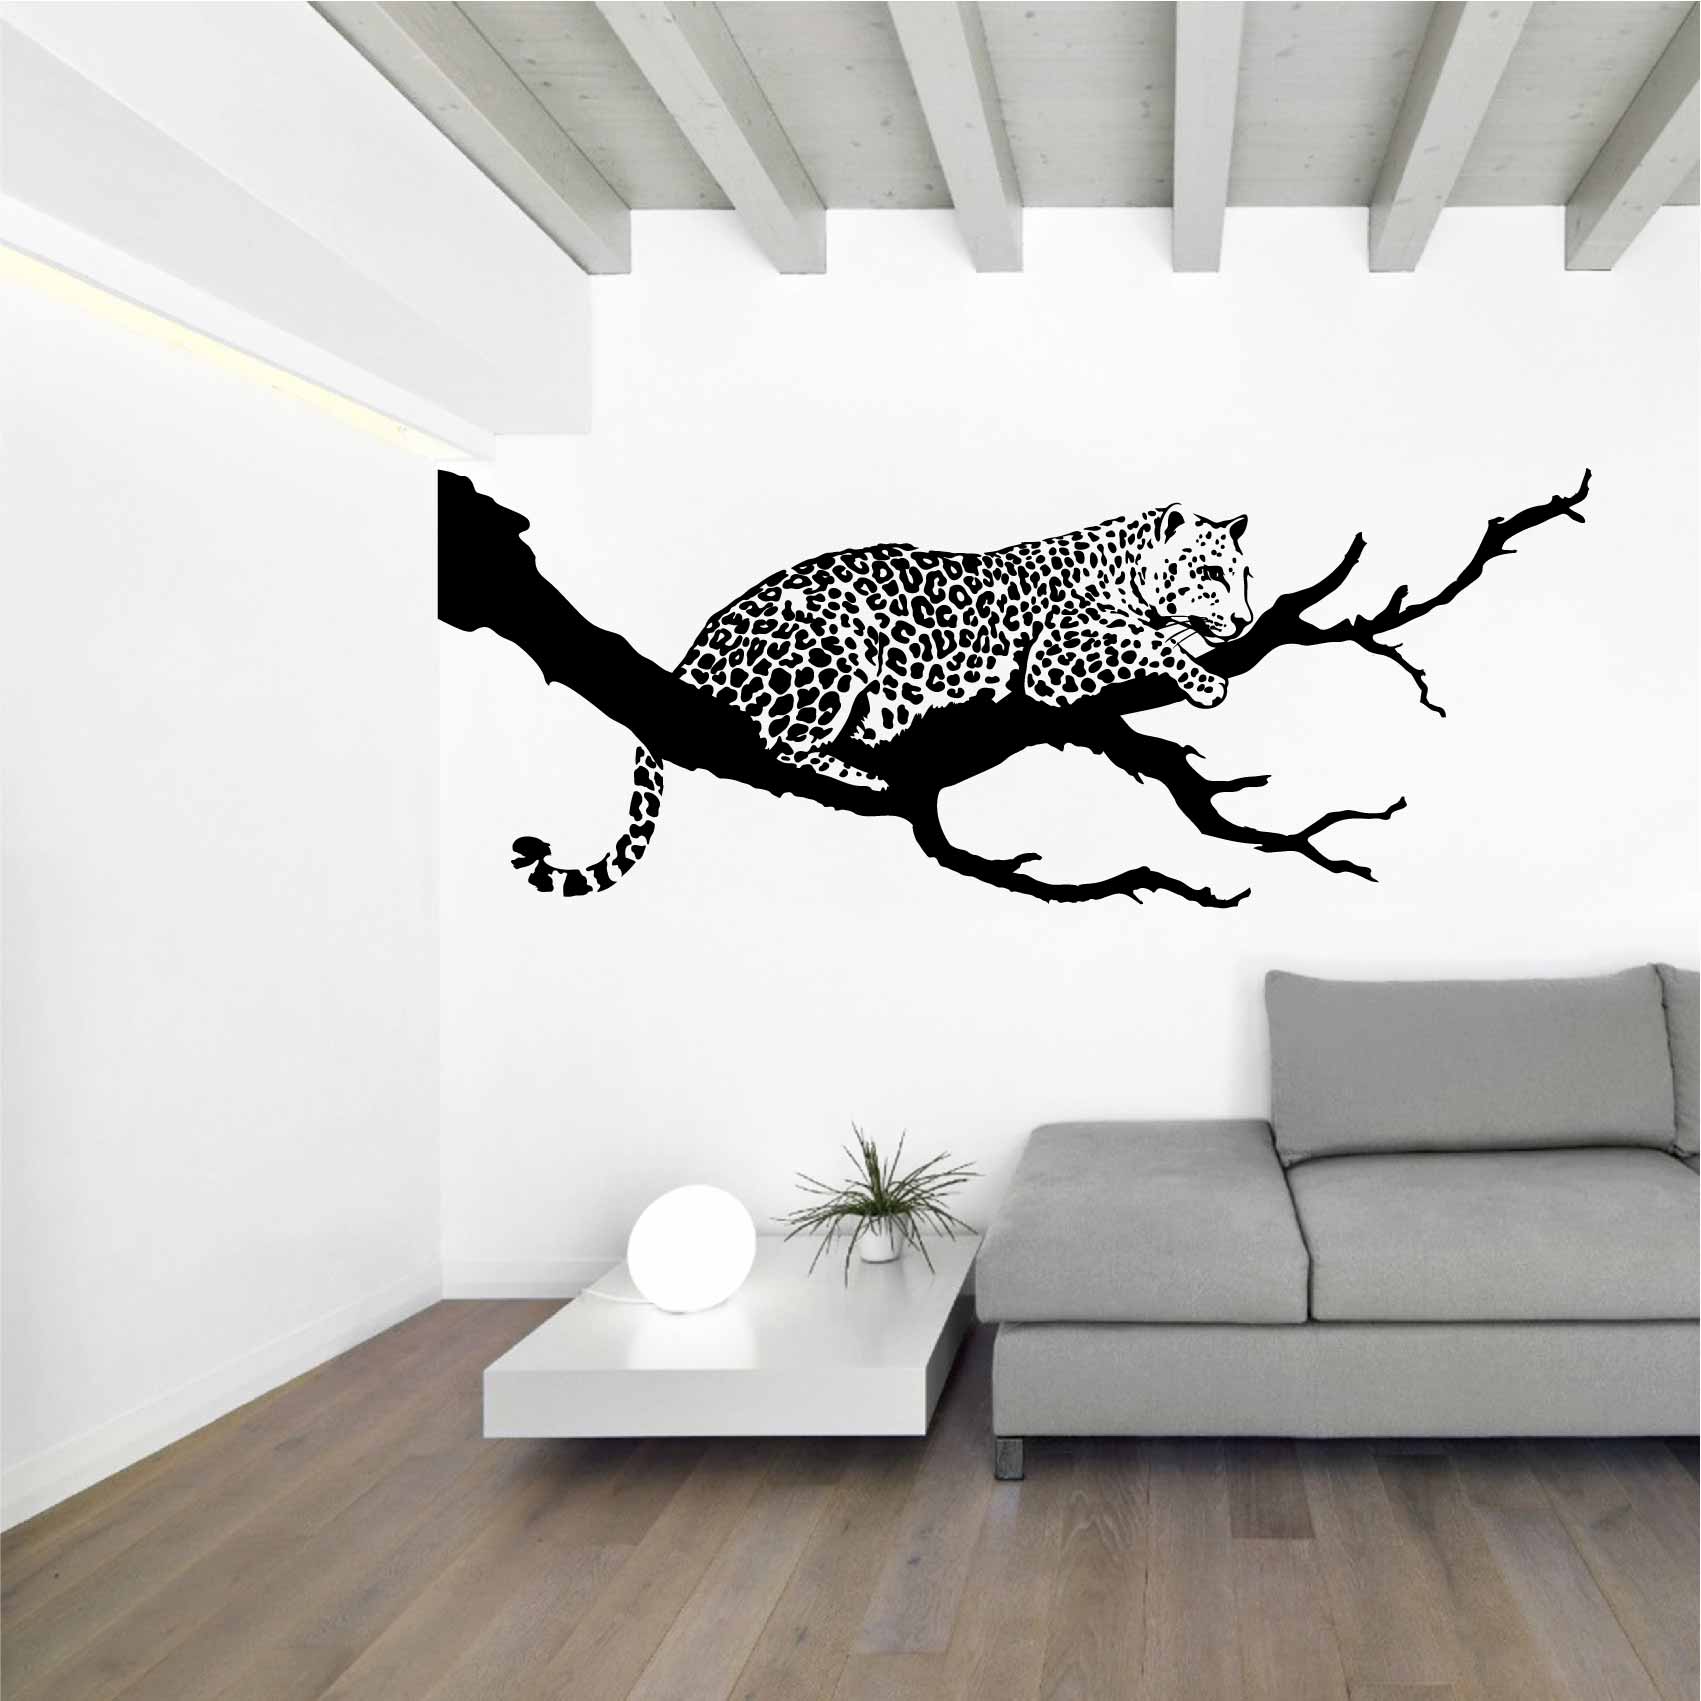 https://media.cdnws.com/_i/61411/2251/2279/53/stickers-leopard-branche-ref15animauxsavane-stickers-animaux-savane-autocollant-muraux-afrique-sticker-mural-enfant-chambre-salon.jpeg